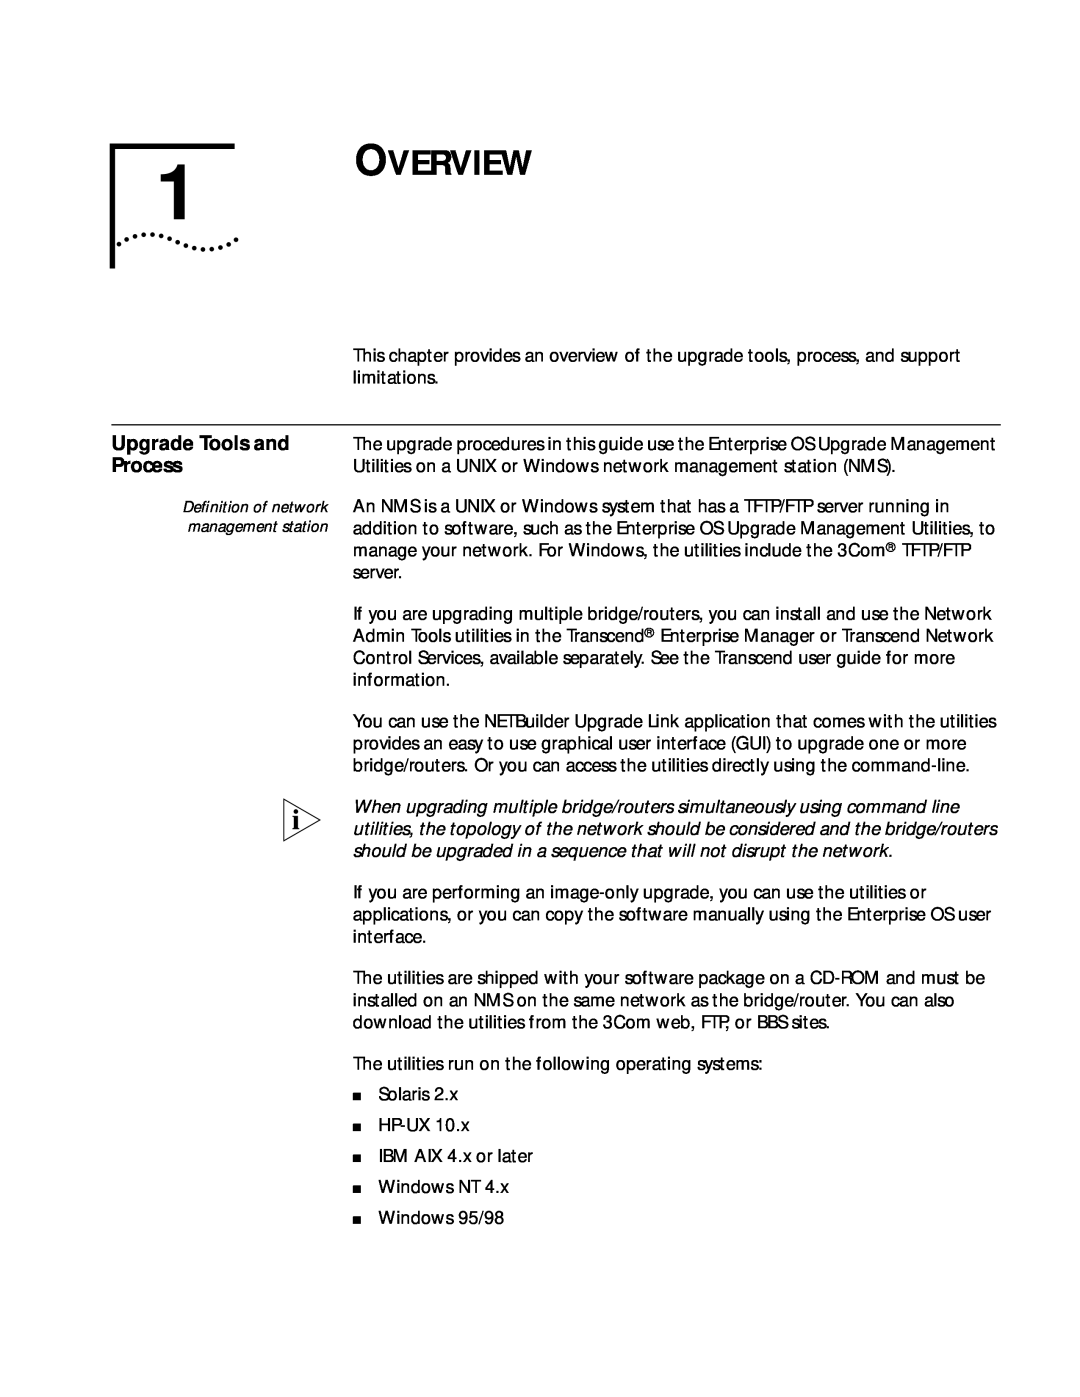 3Com ENTERPRISE OS 11.3 manual Overview, Upgrade Tools and, Process 